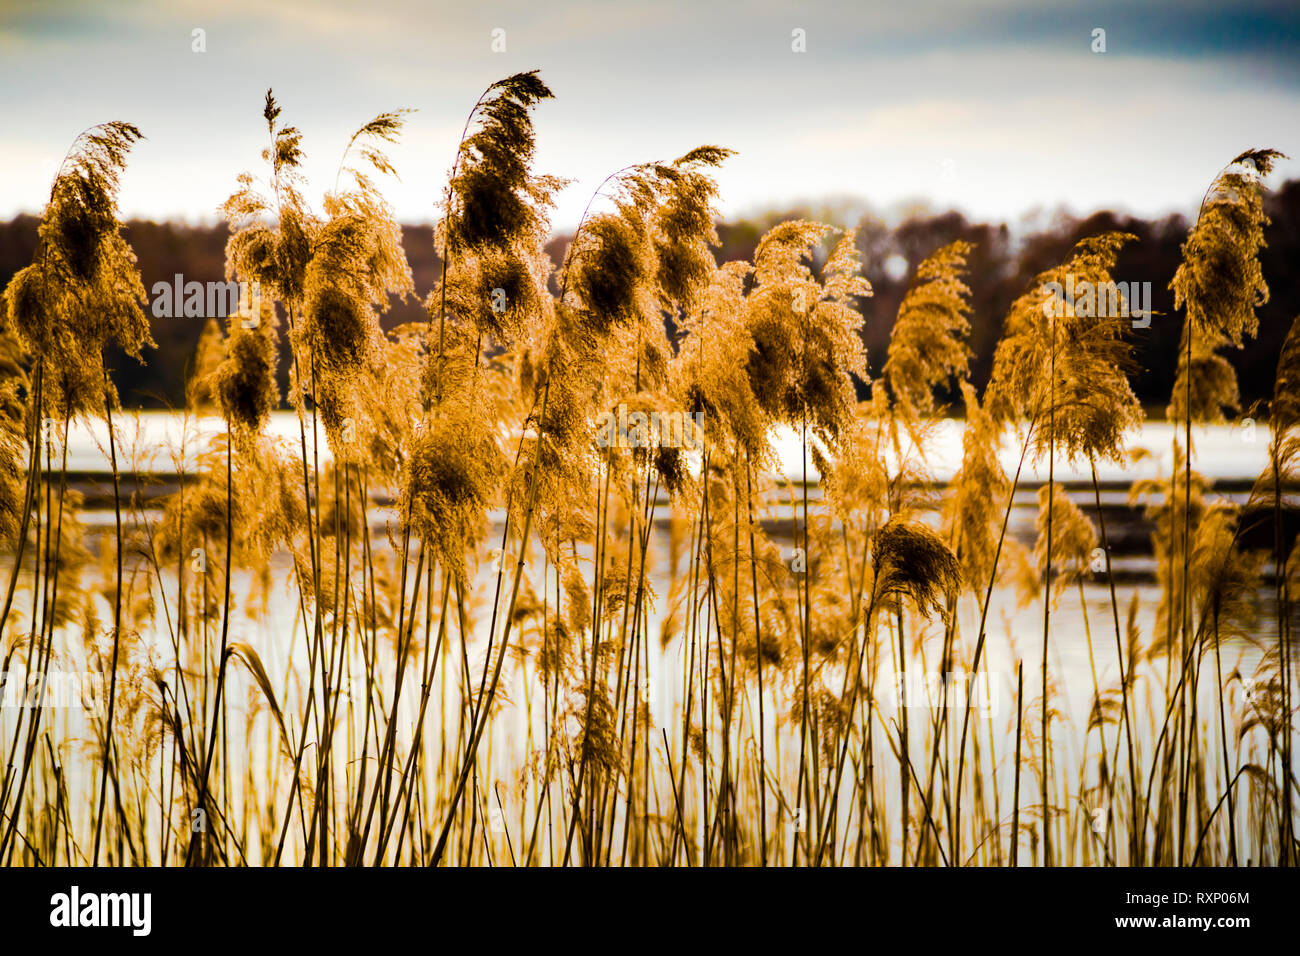 Landscape with lake near Fincken, Germany Stock Photo